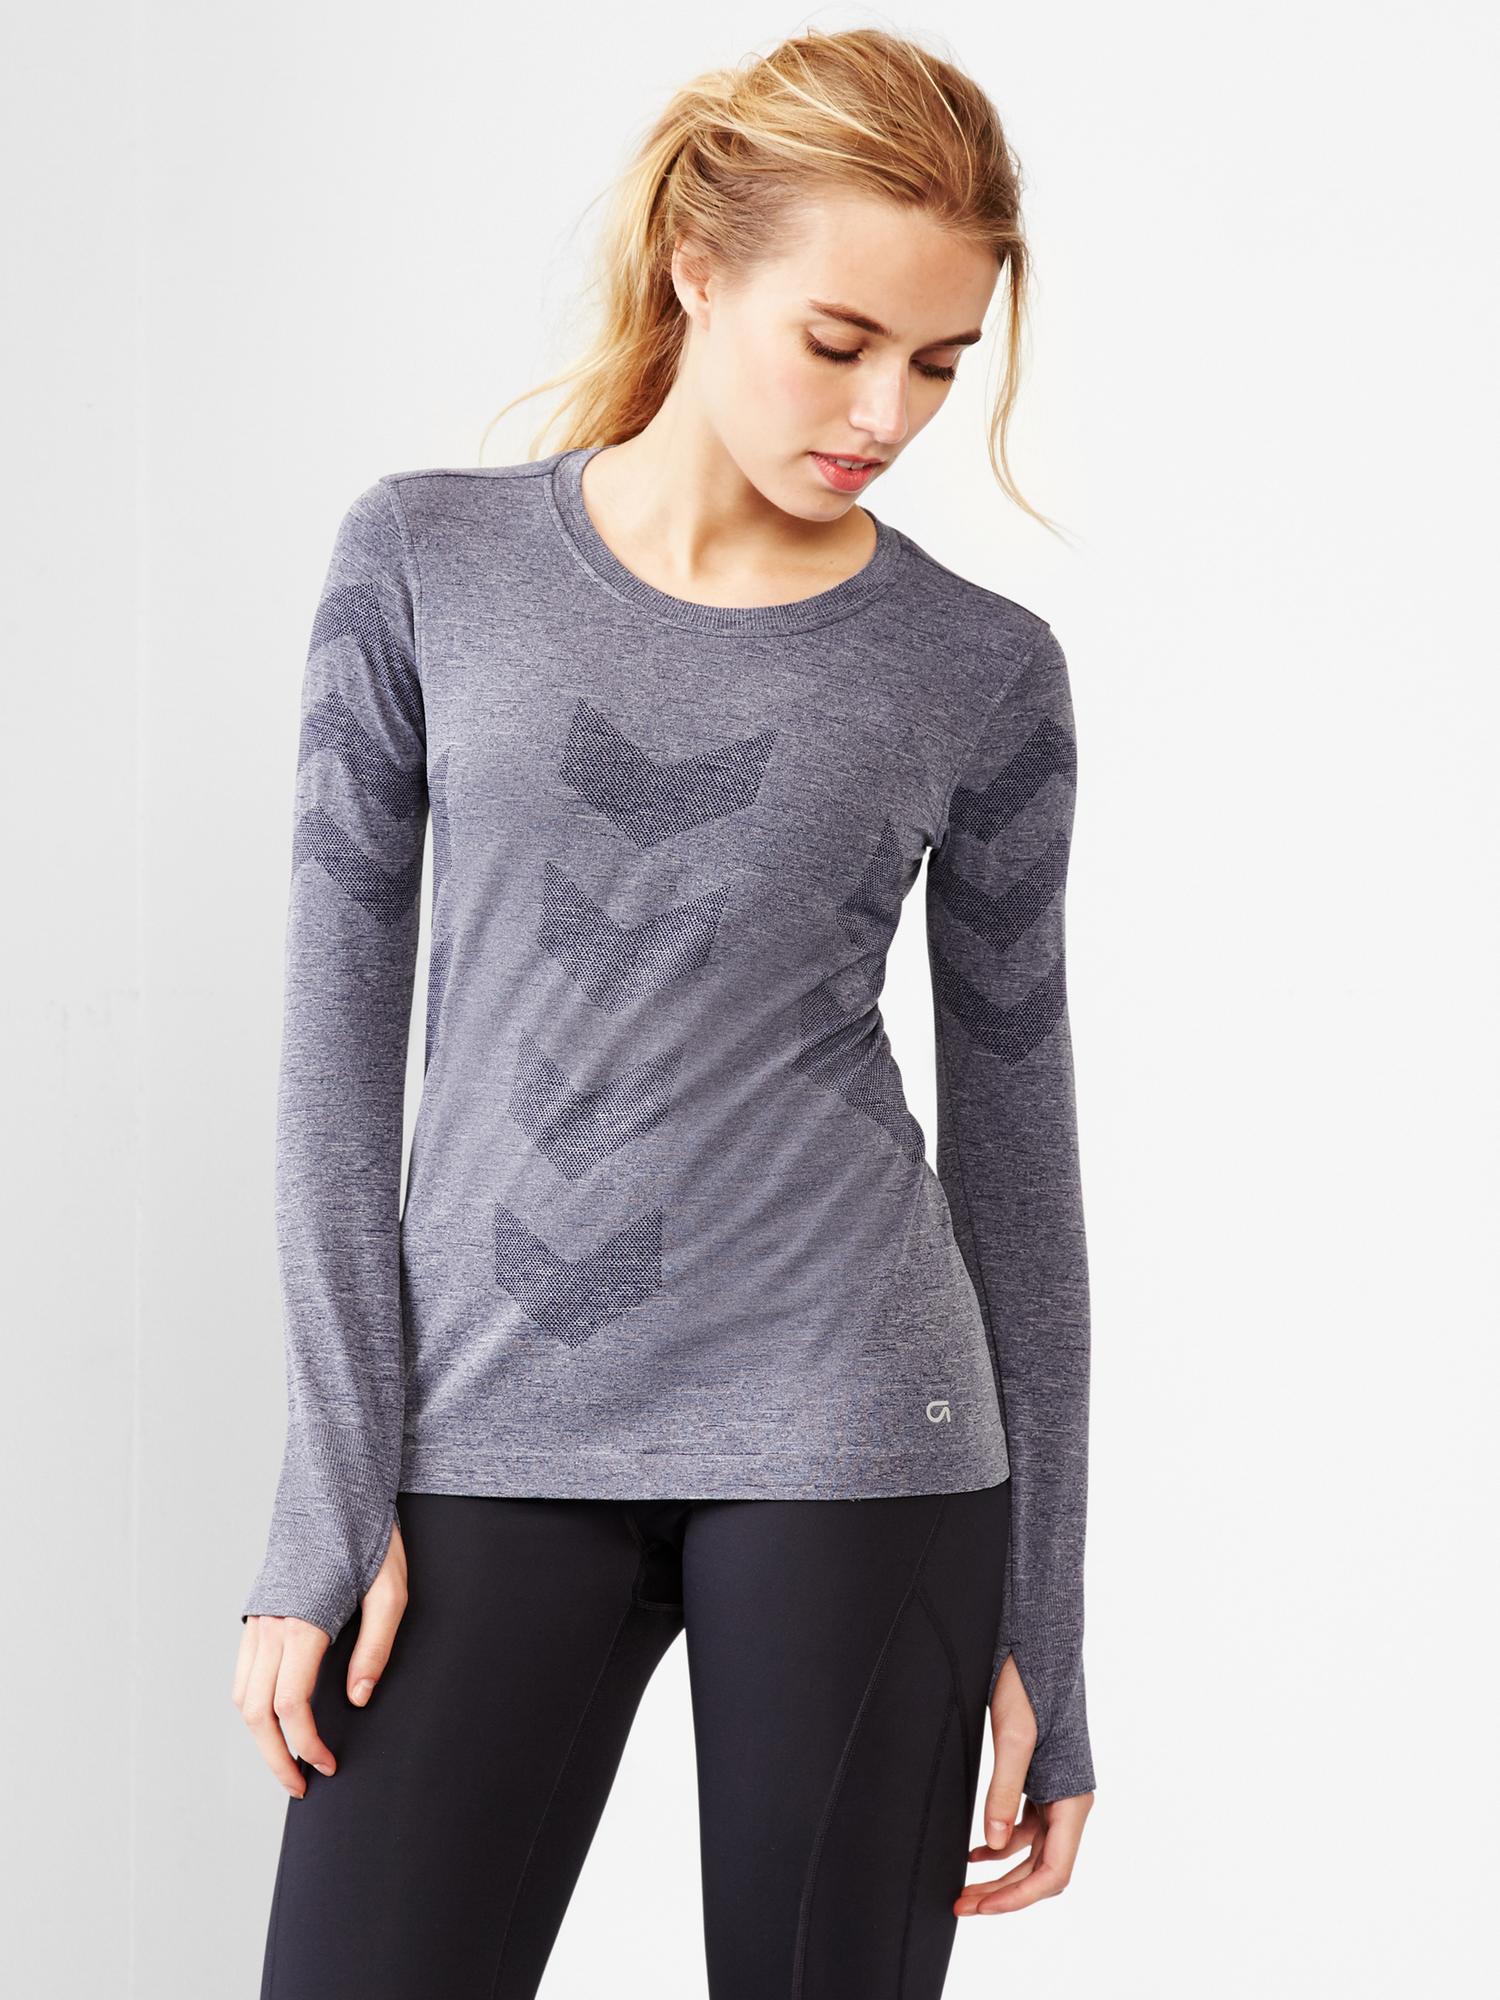 Gap Fit Shirt Womens XS Motion Seamless Active Long Sleeve Thumbholes Top  Gray